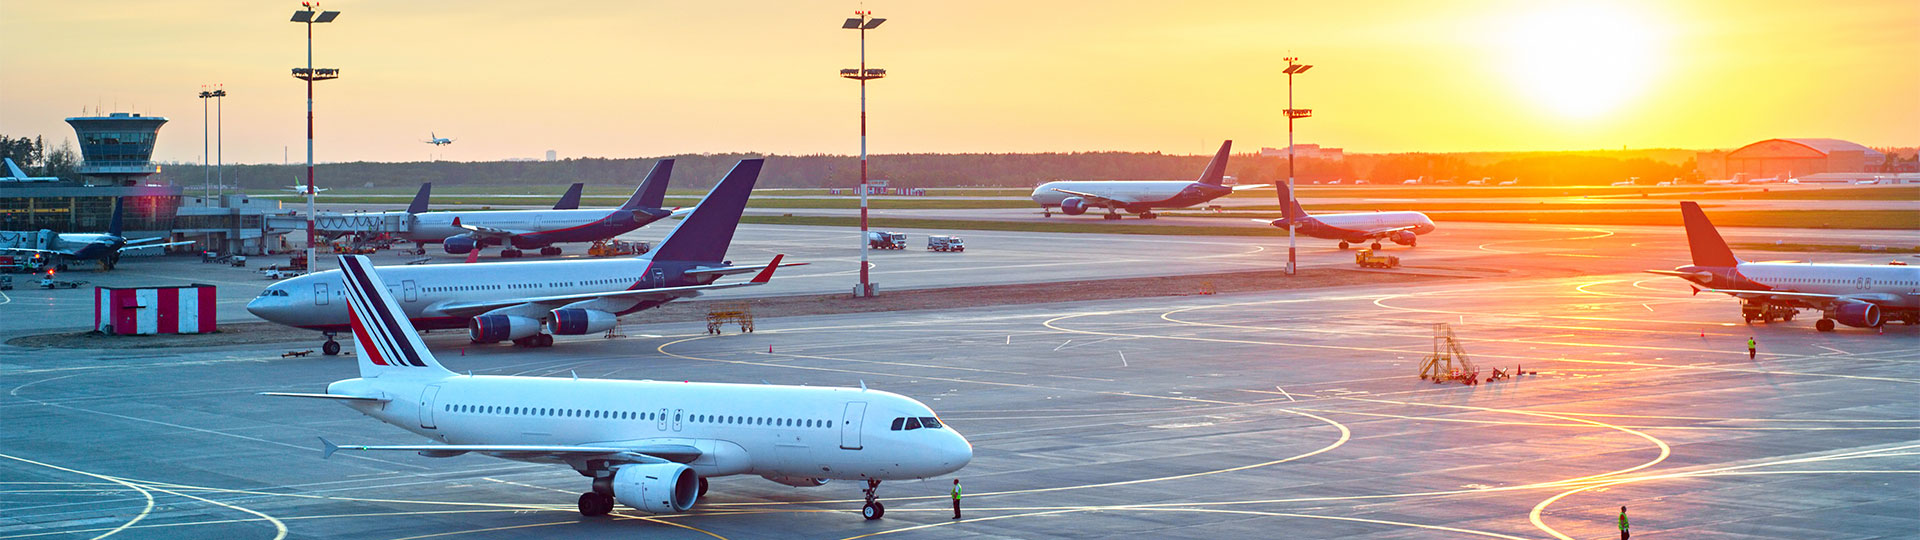 Modern airport at sunset.